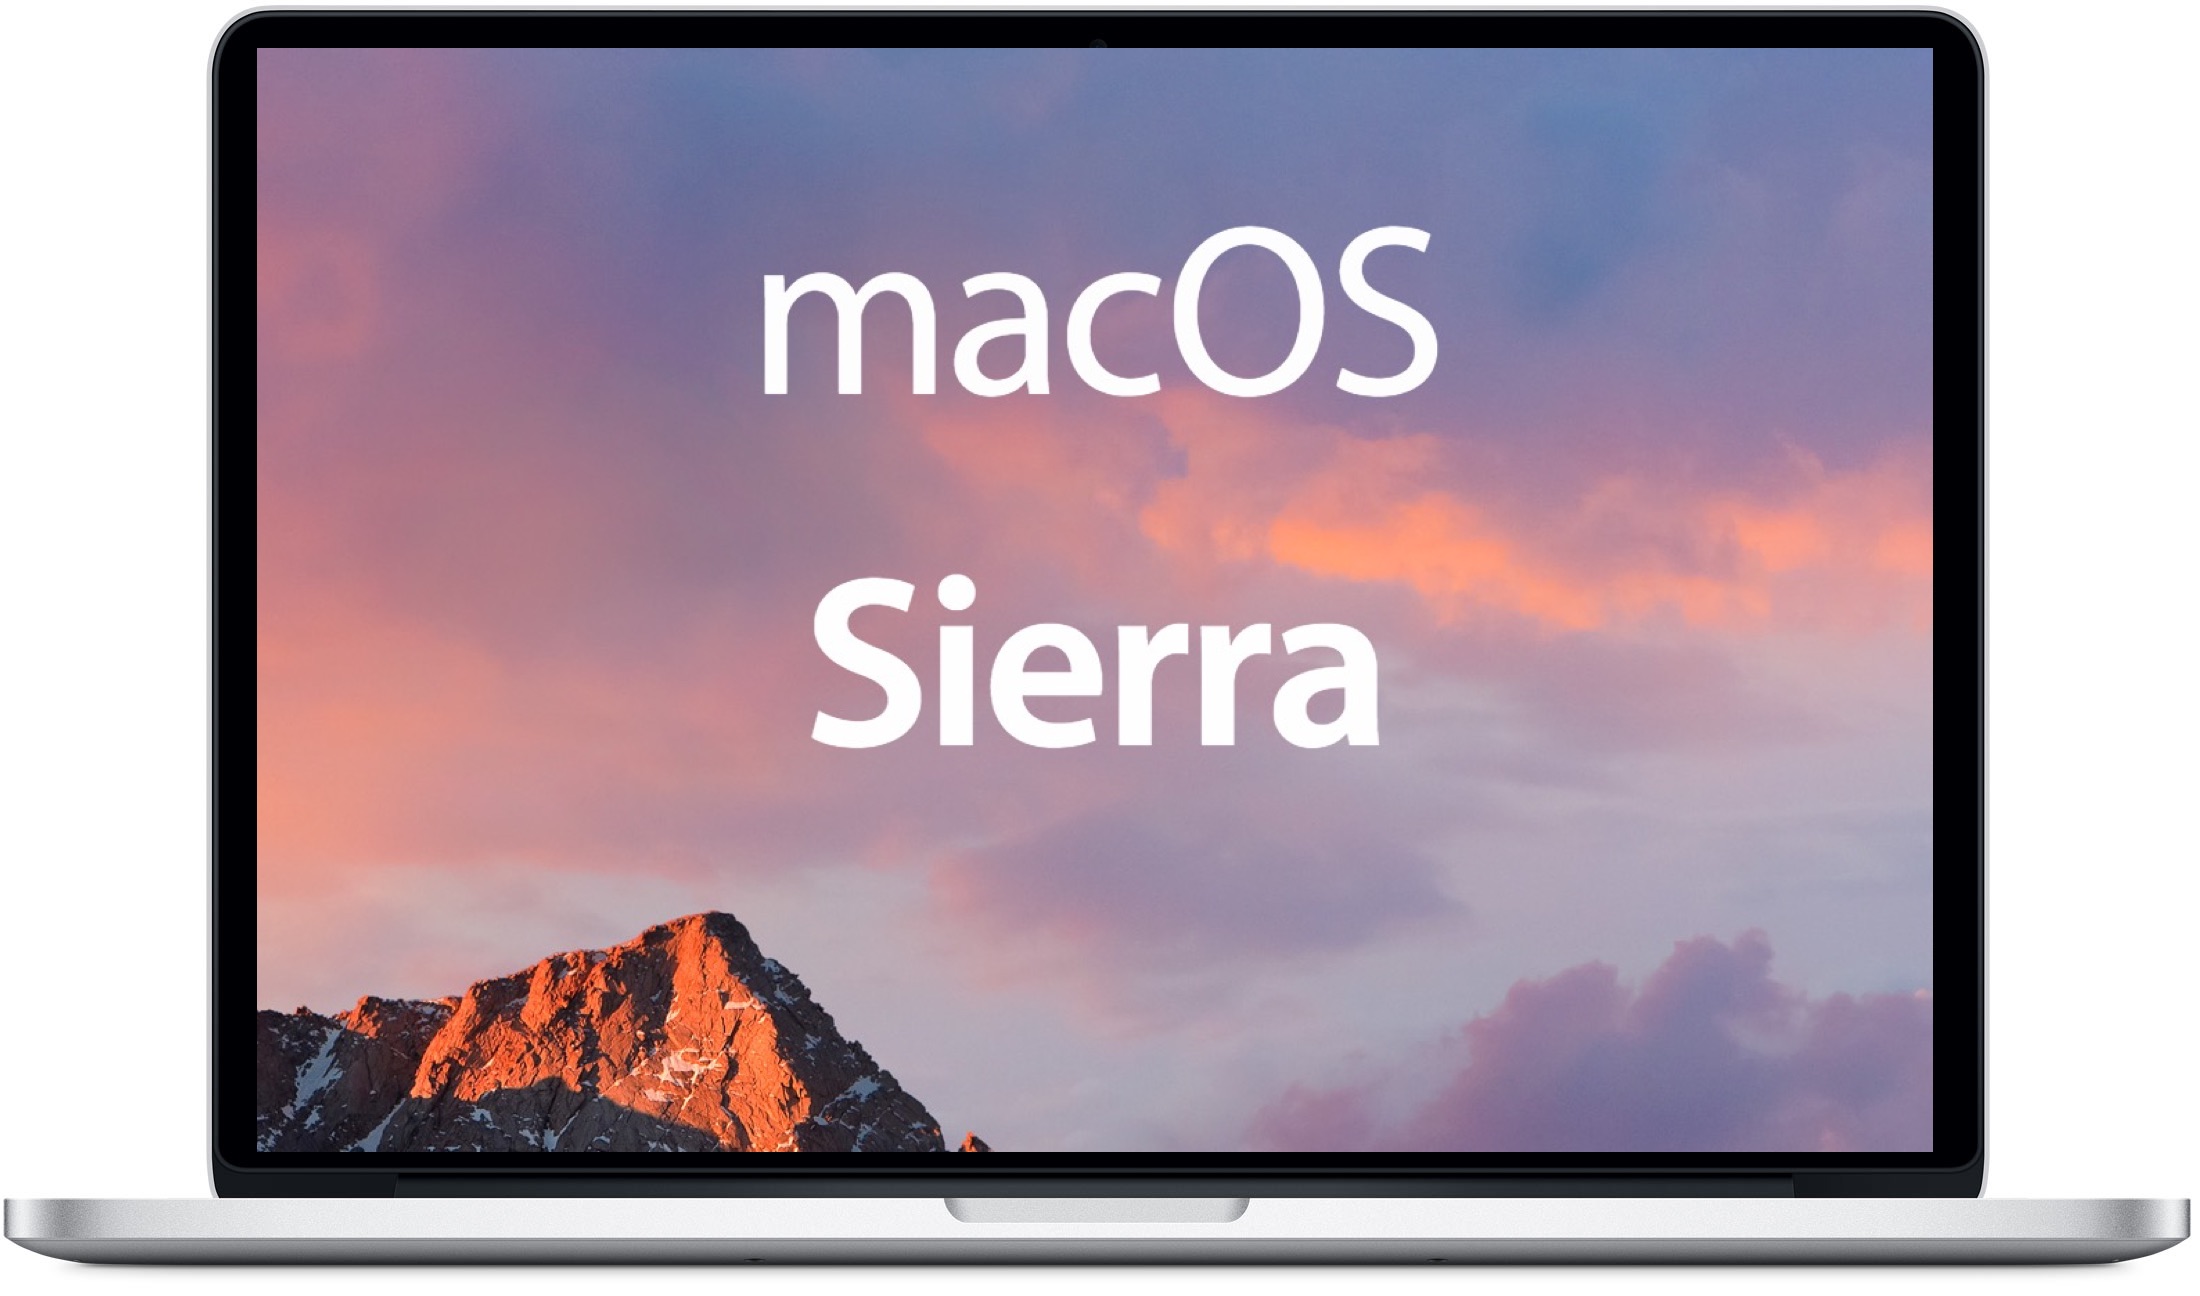 where can i download mac os sierra